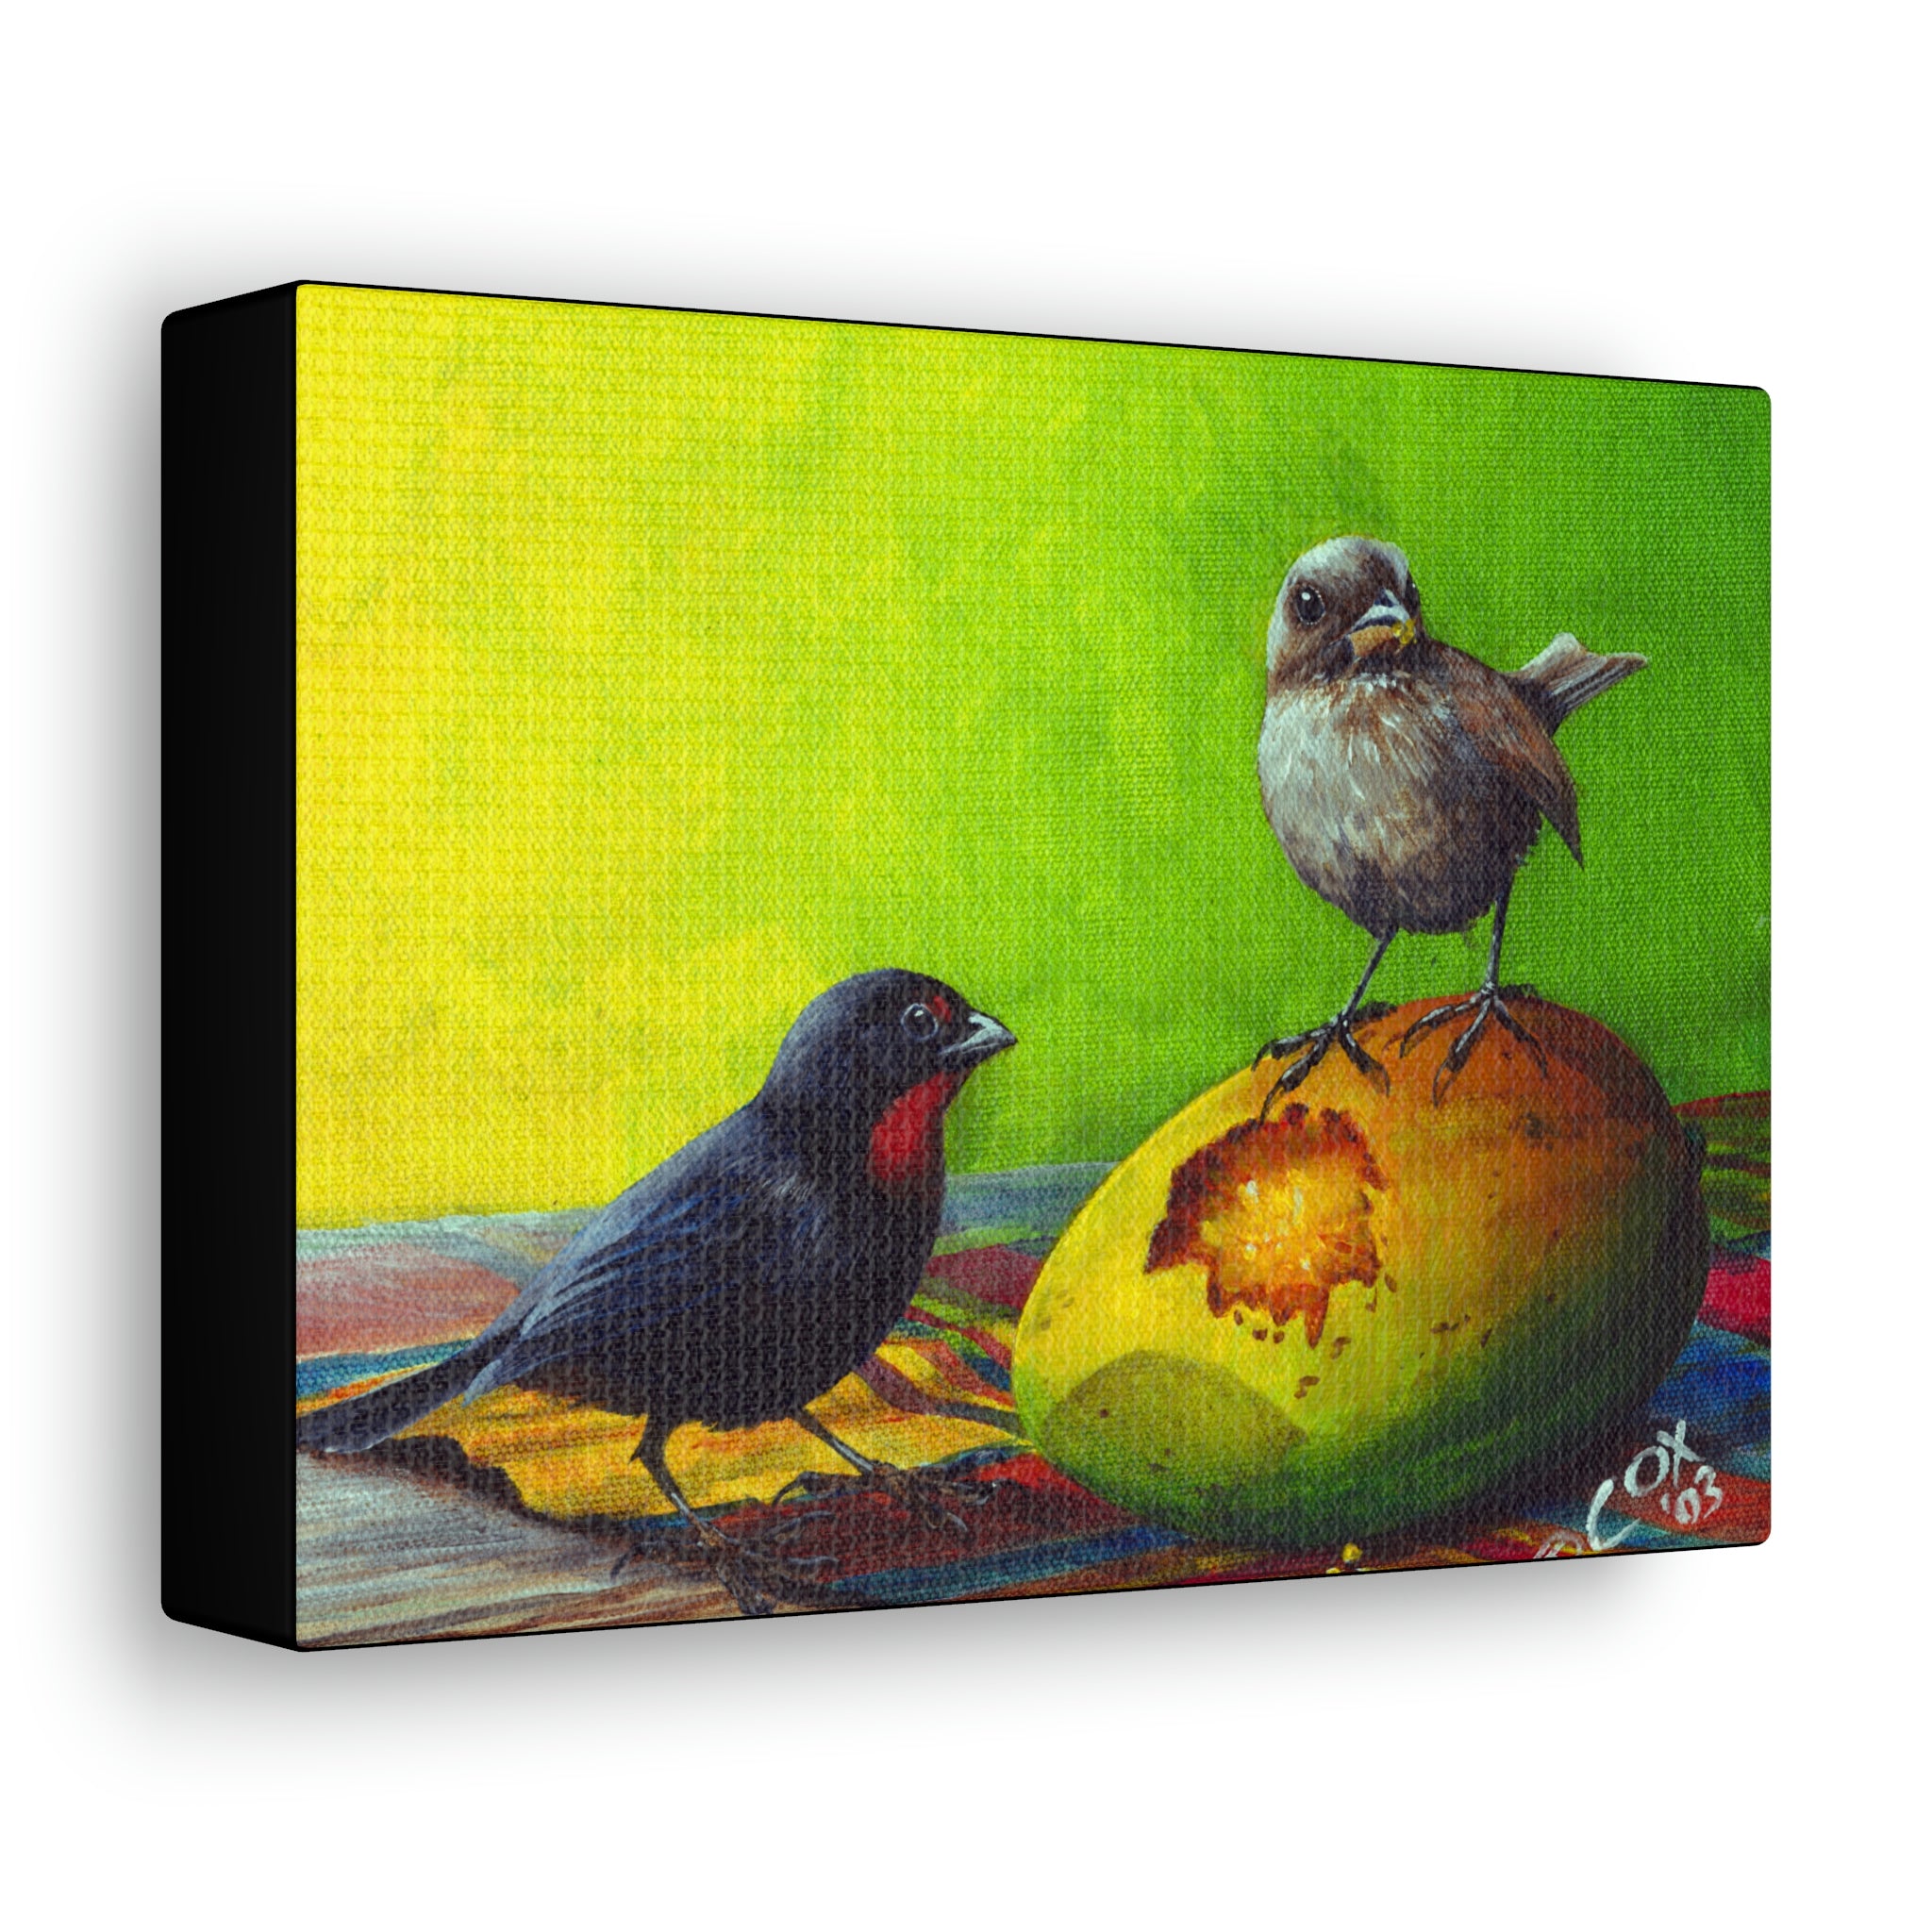 Canvas Wall Art, Lesser Antillean Bullfinches and Mango, Tropical Birds, Caribbean Art